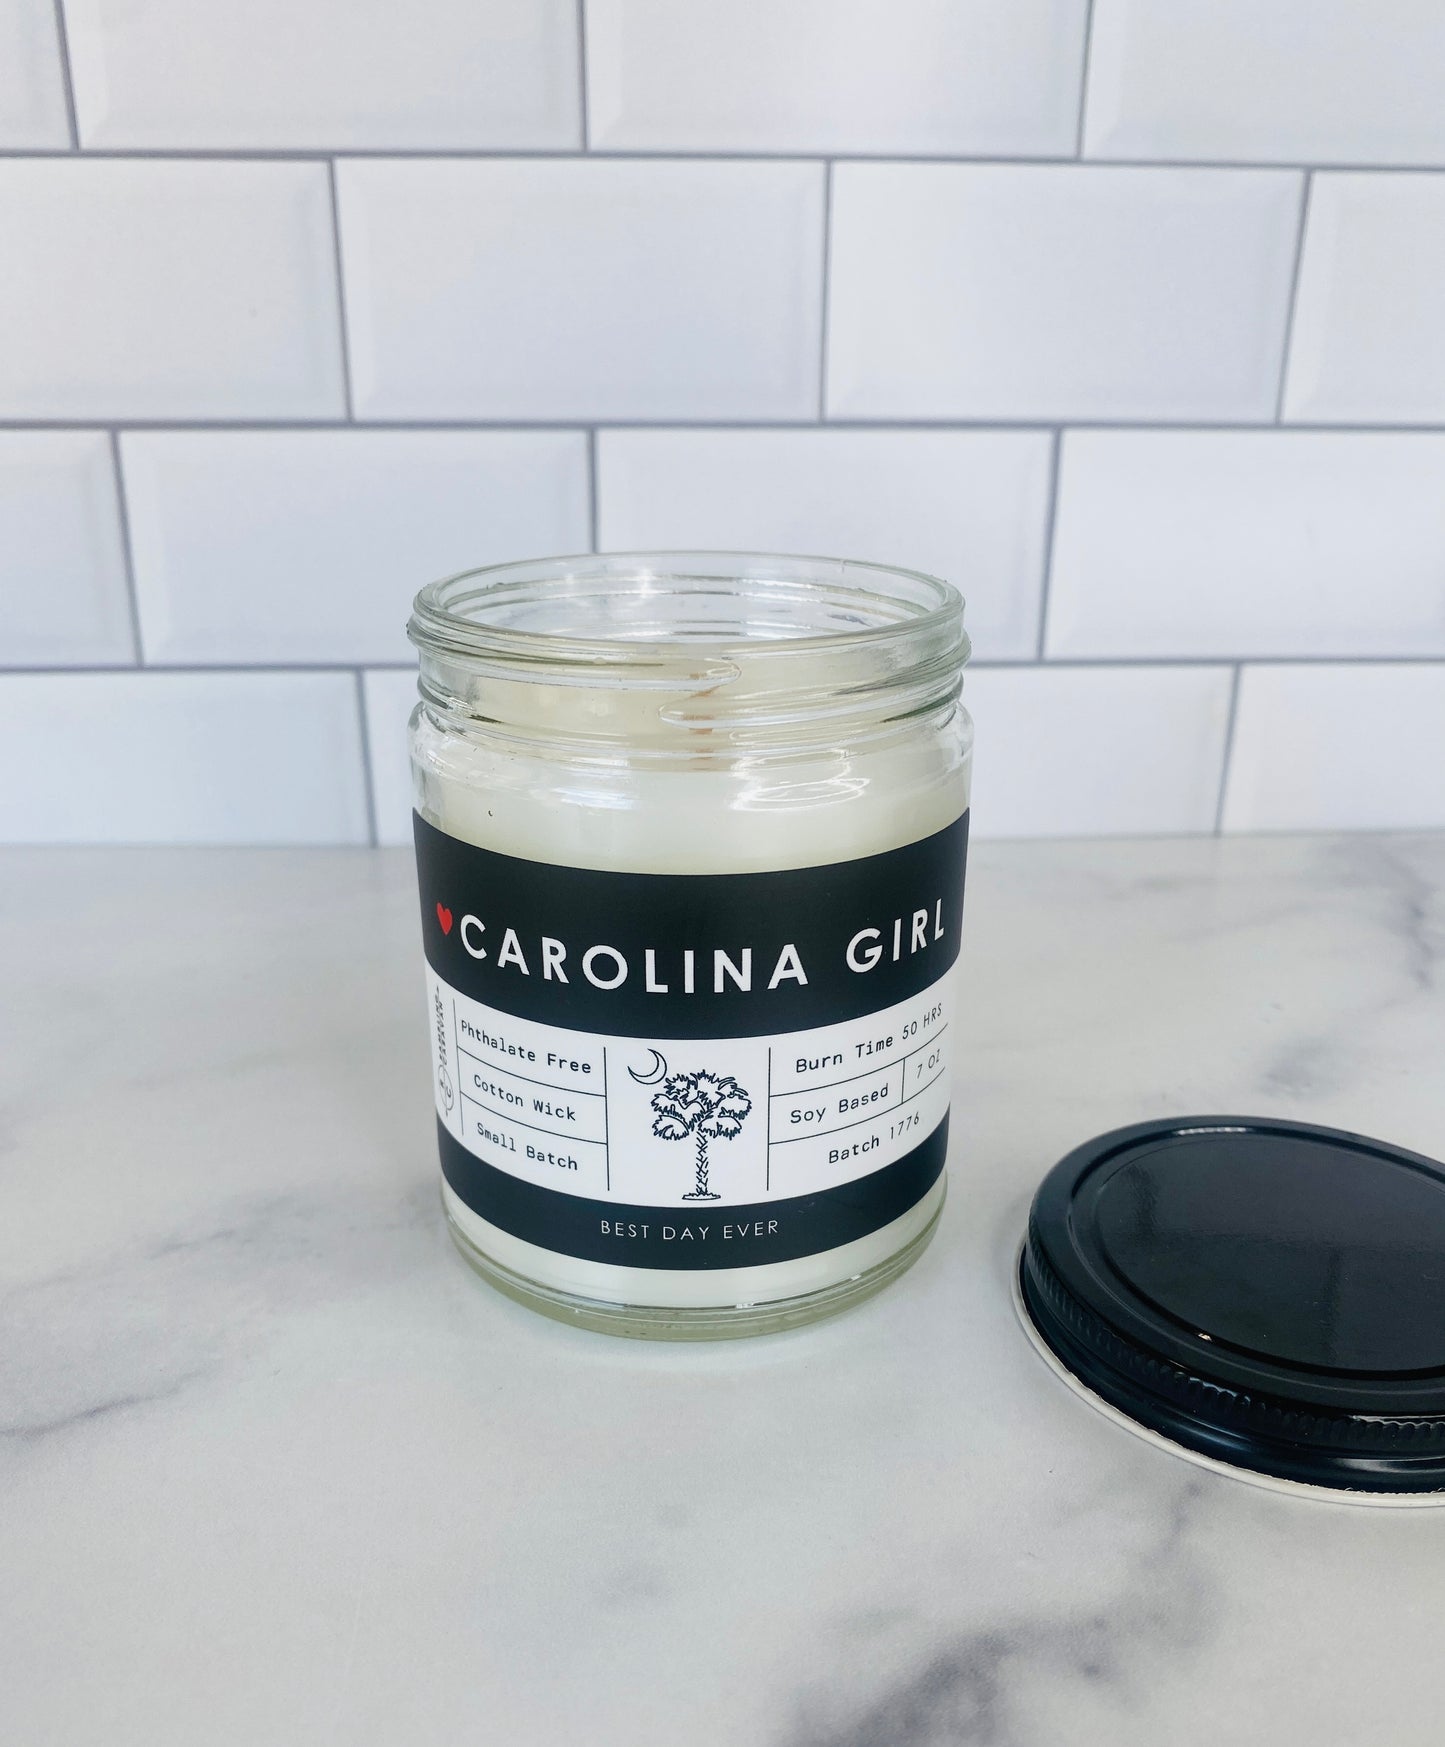 Carolina Girl (South Carolina) Candle